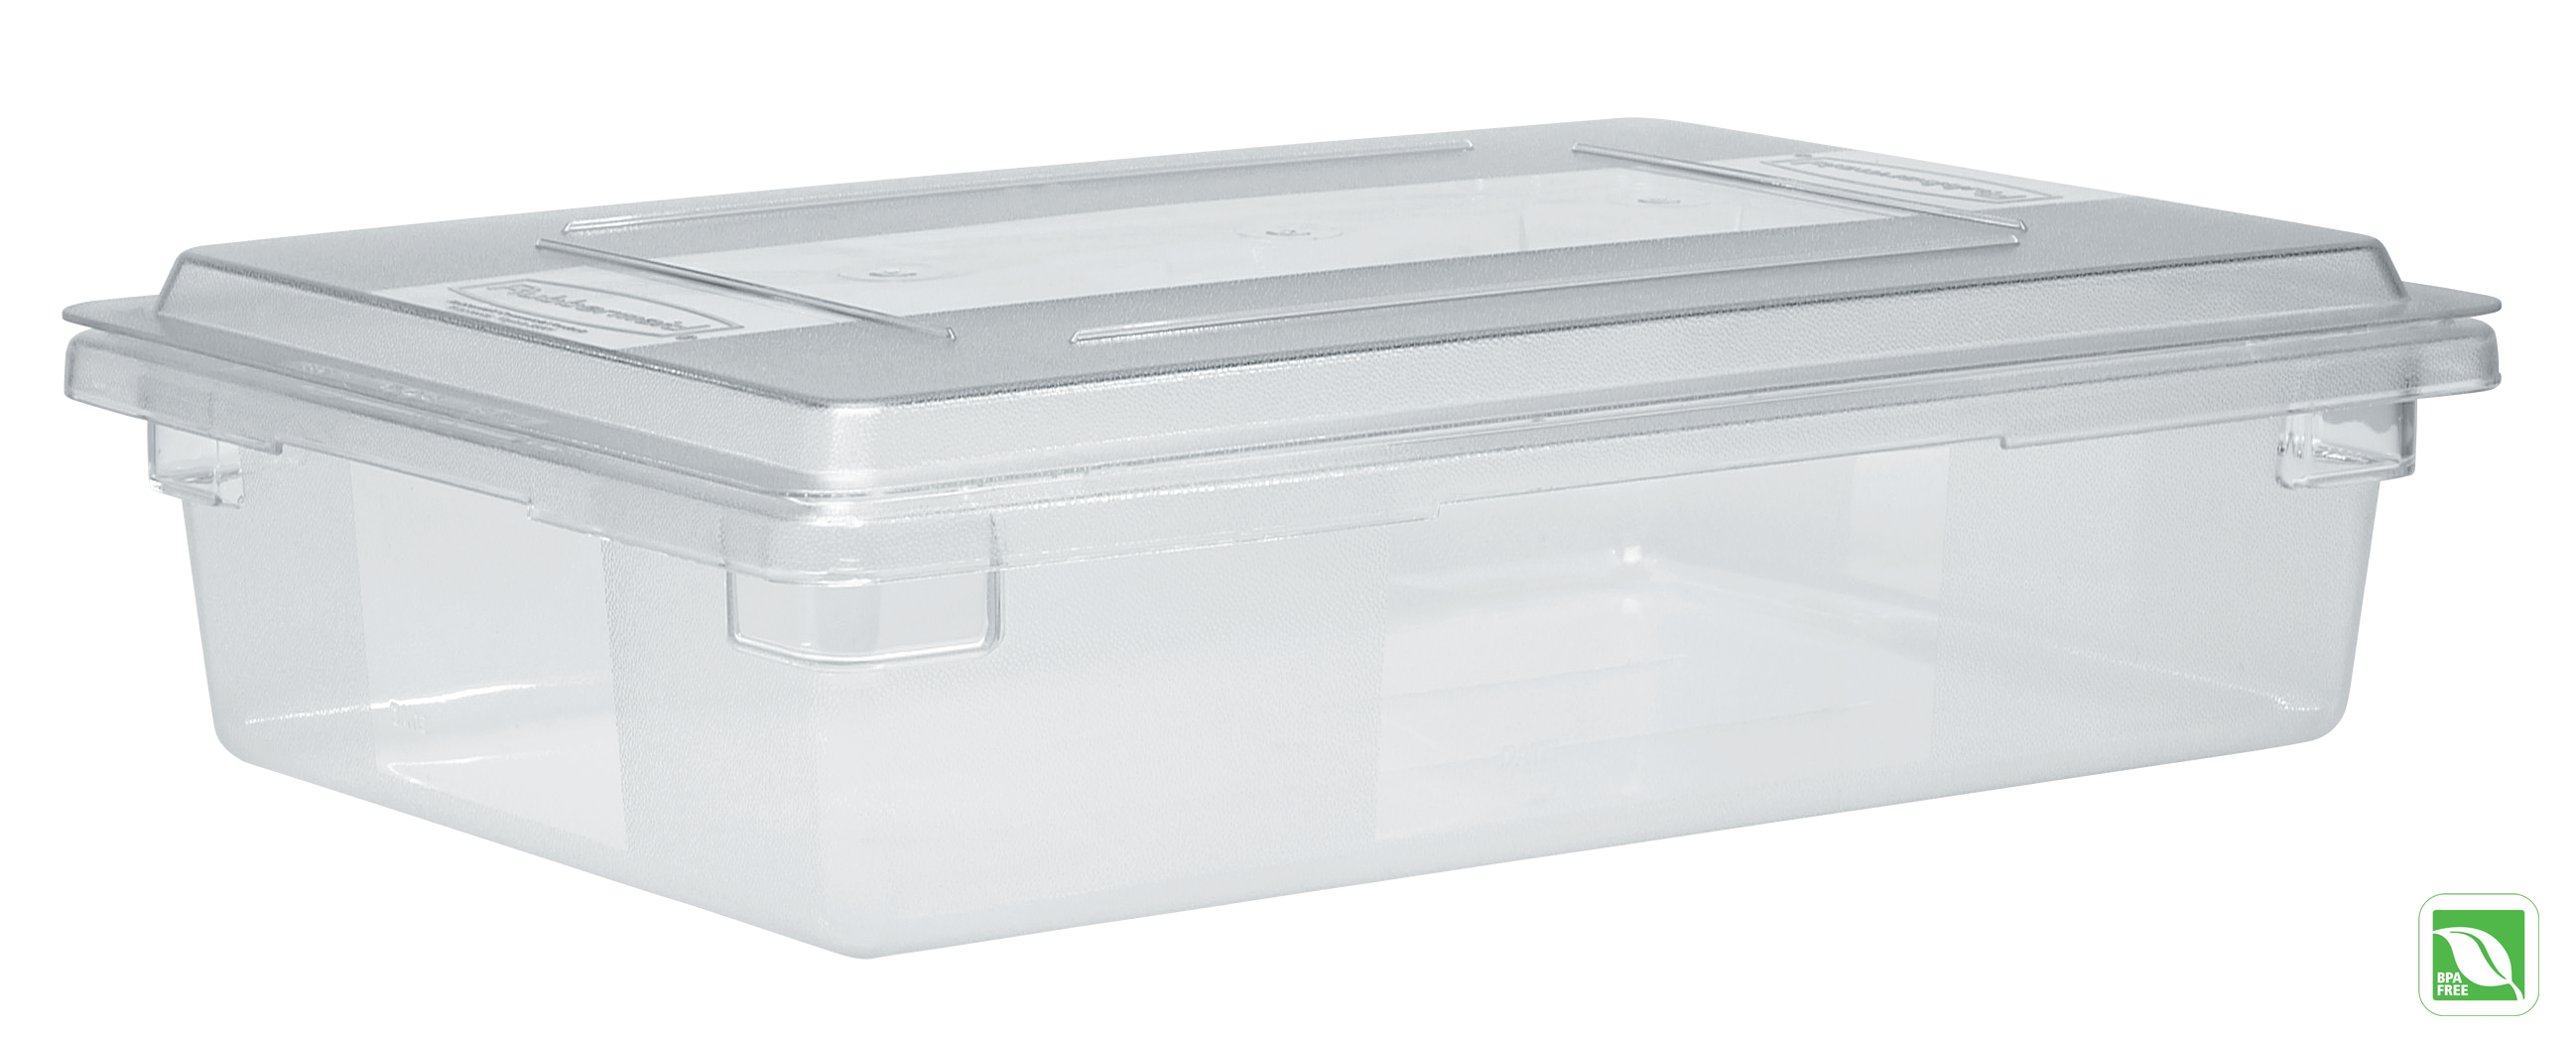 Food Box Colander - FG330300CLR, Food Box Colander Clear